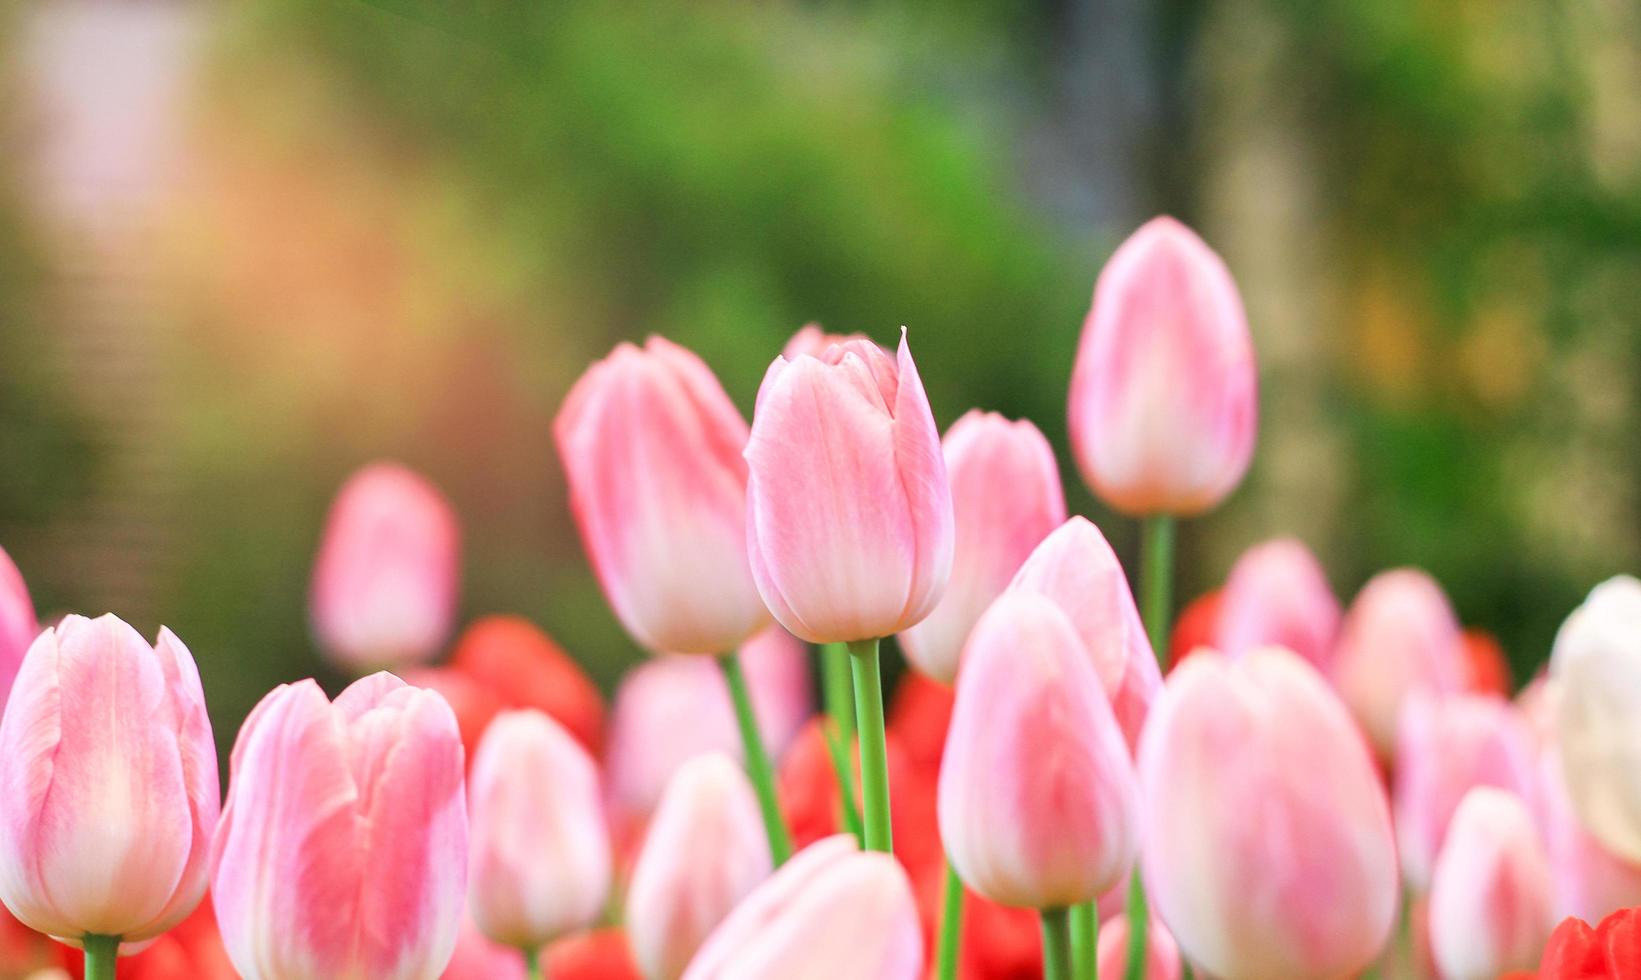 lindas tulipas florescendo no jardim foto